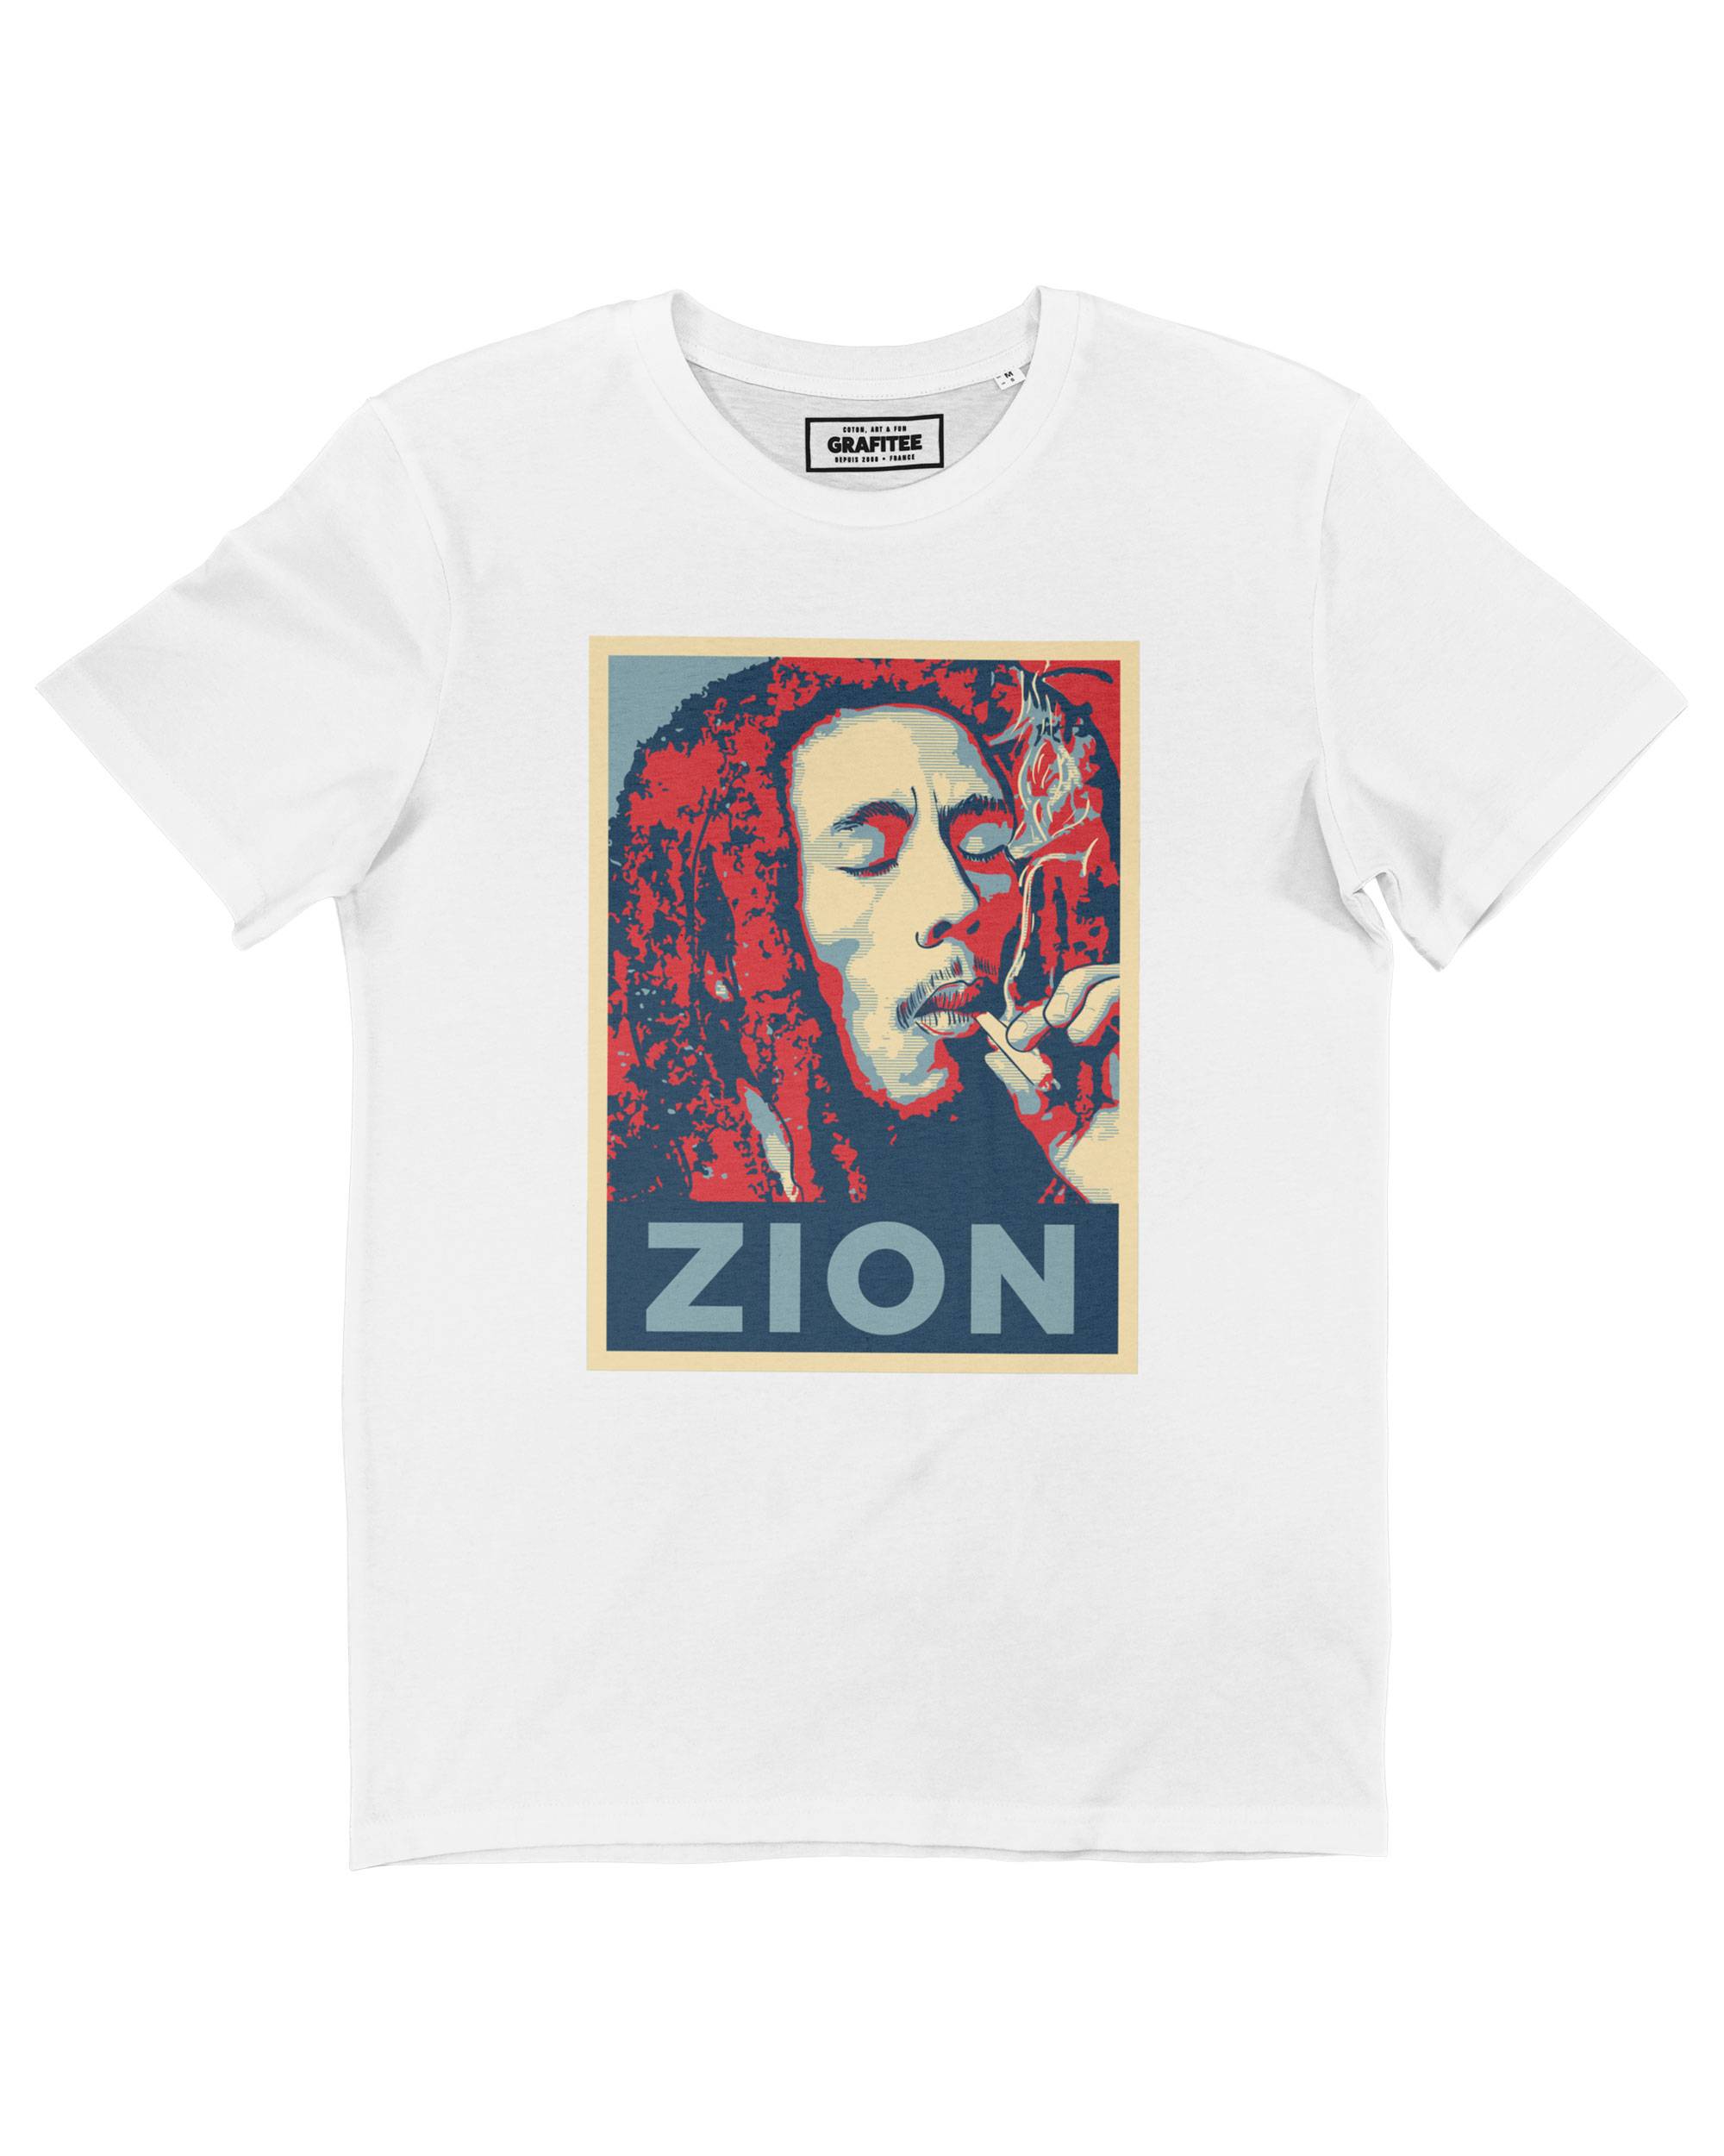 T-shirt Bob Marley Zion Grafitee